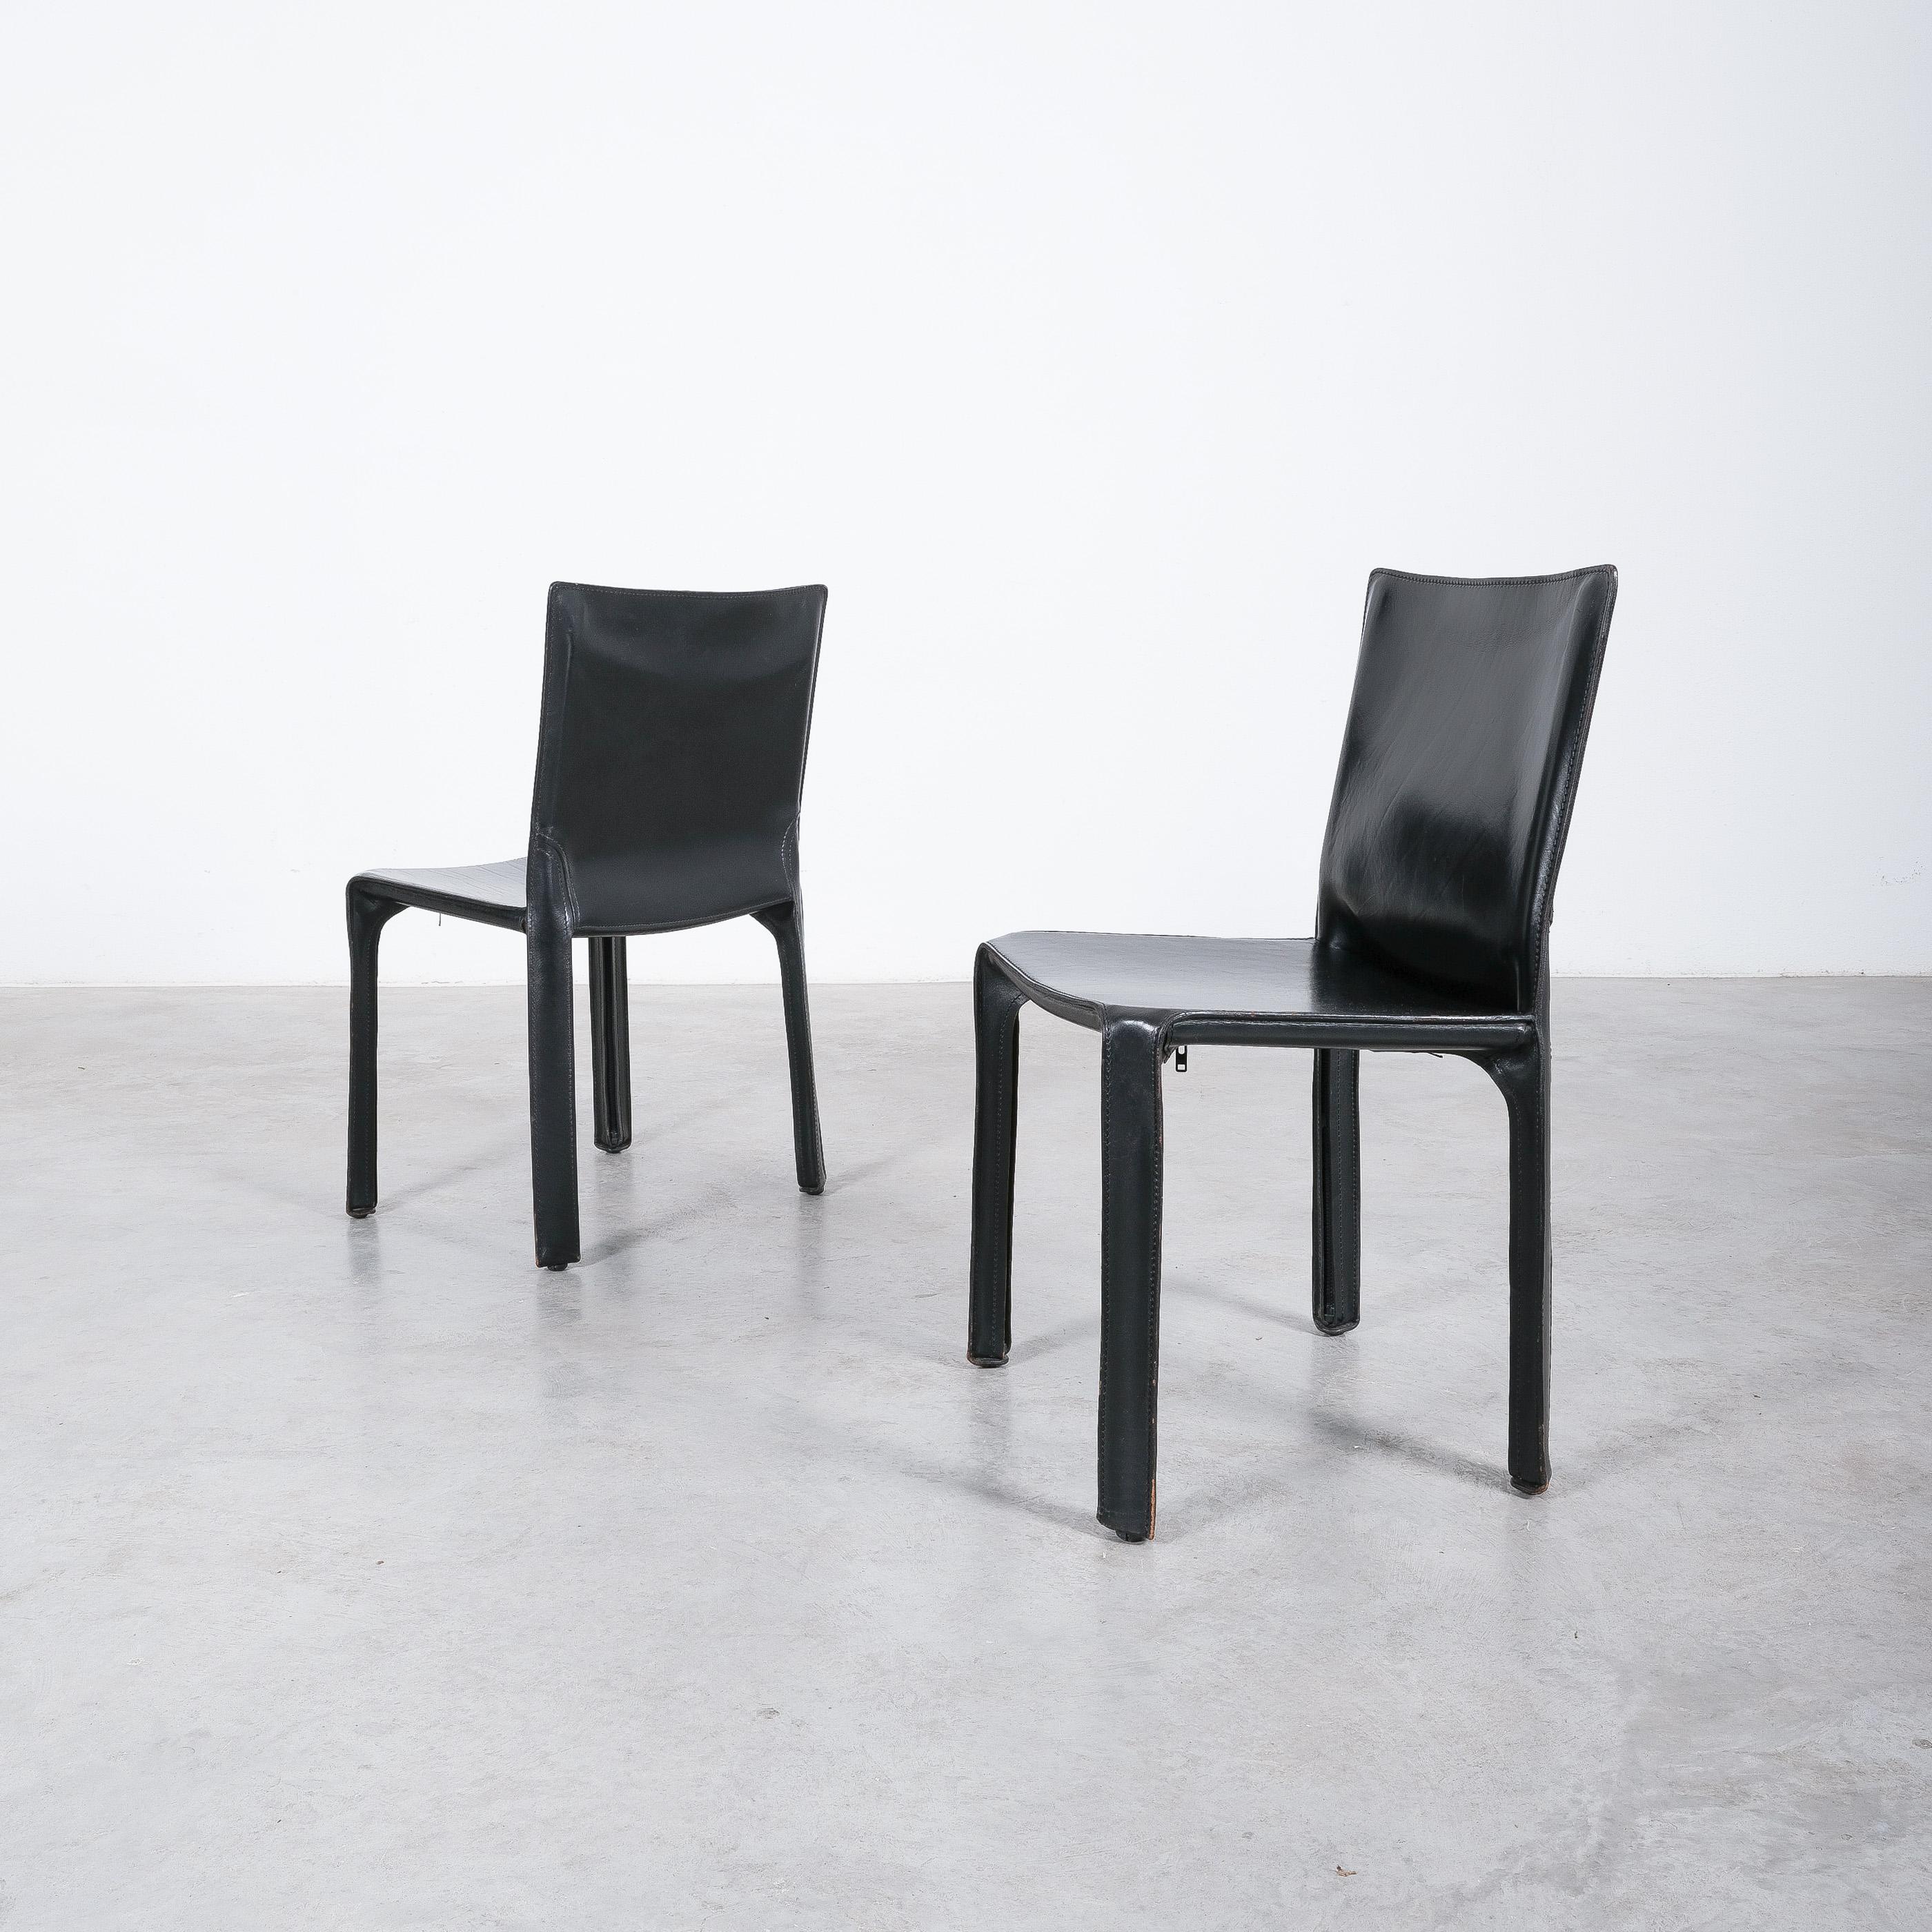 Mario Bellini Cassina Cab 412 Twelve (12) Black Leather Dining Chairs, Italy 1